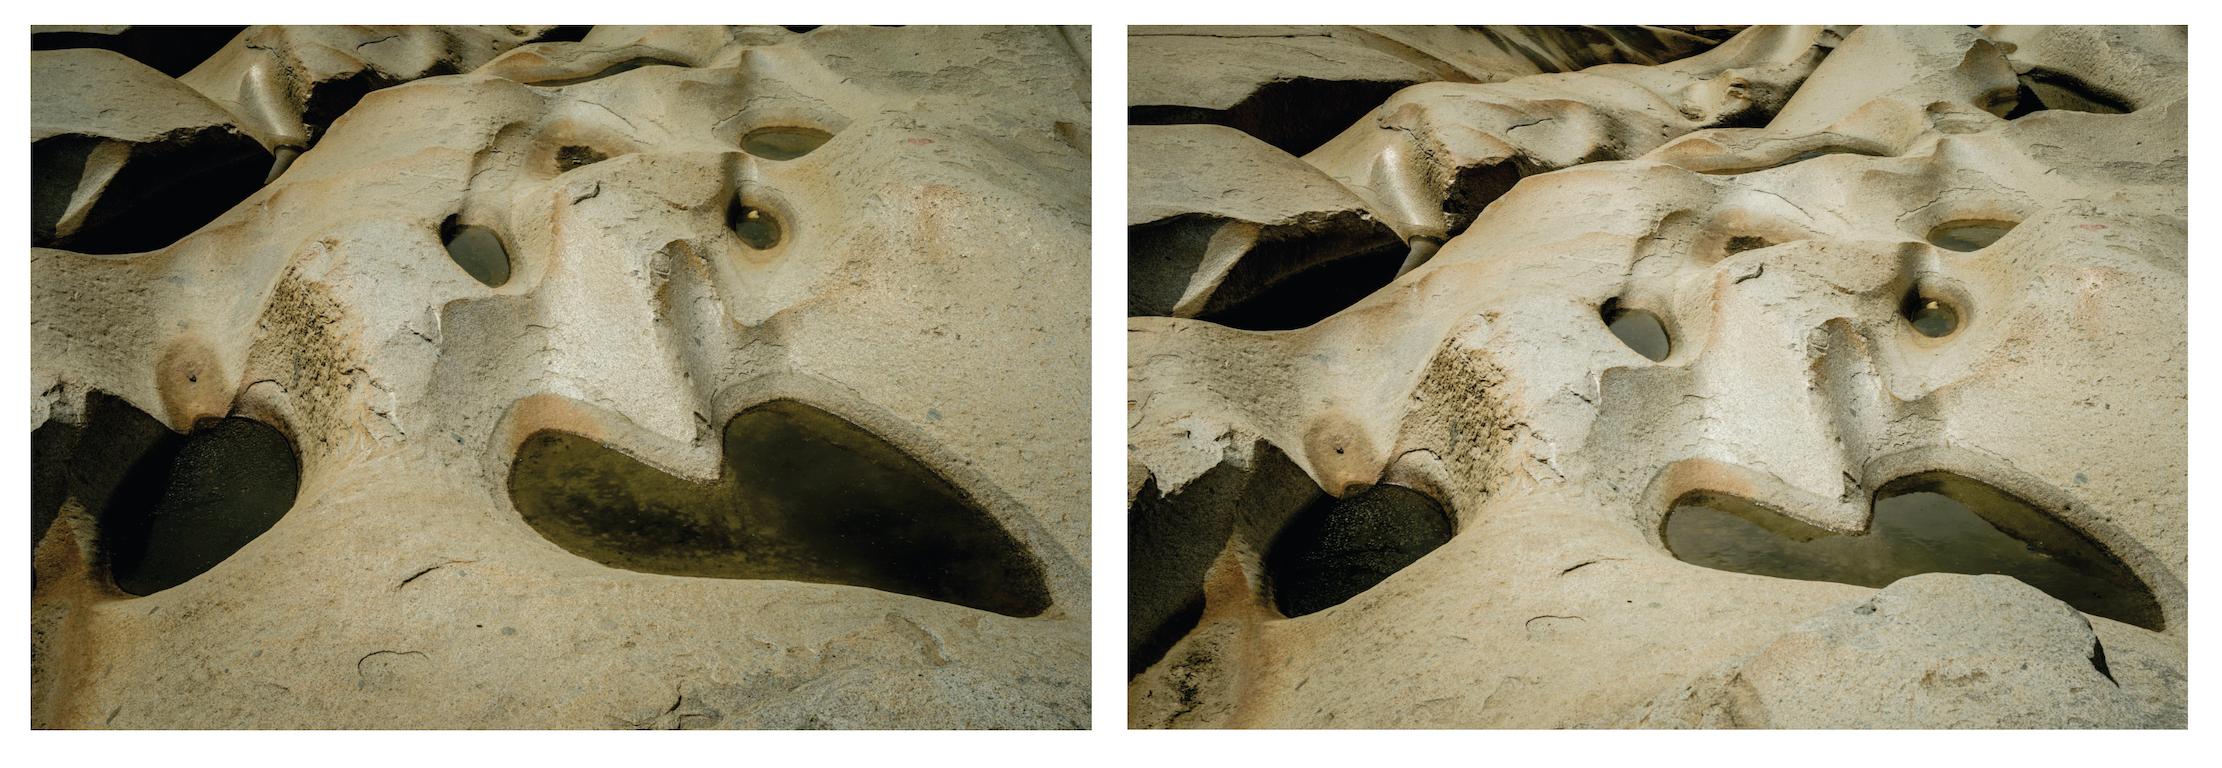 Mauricio Velez Landscape Photograph - Untitled V and Untitled VI. Abstract rocks landscape color photographs